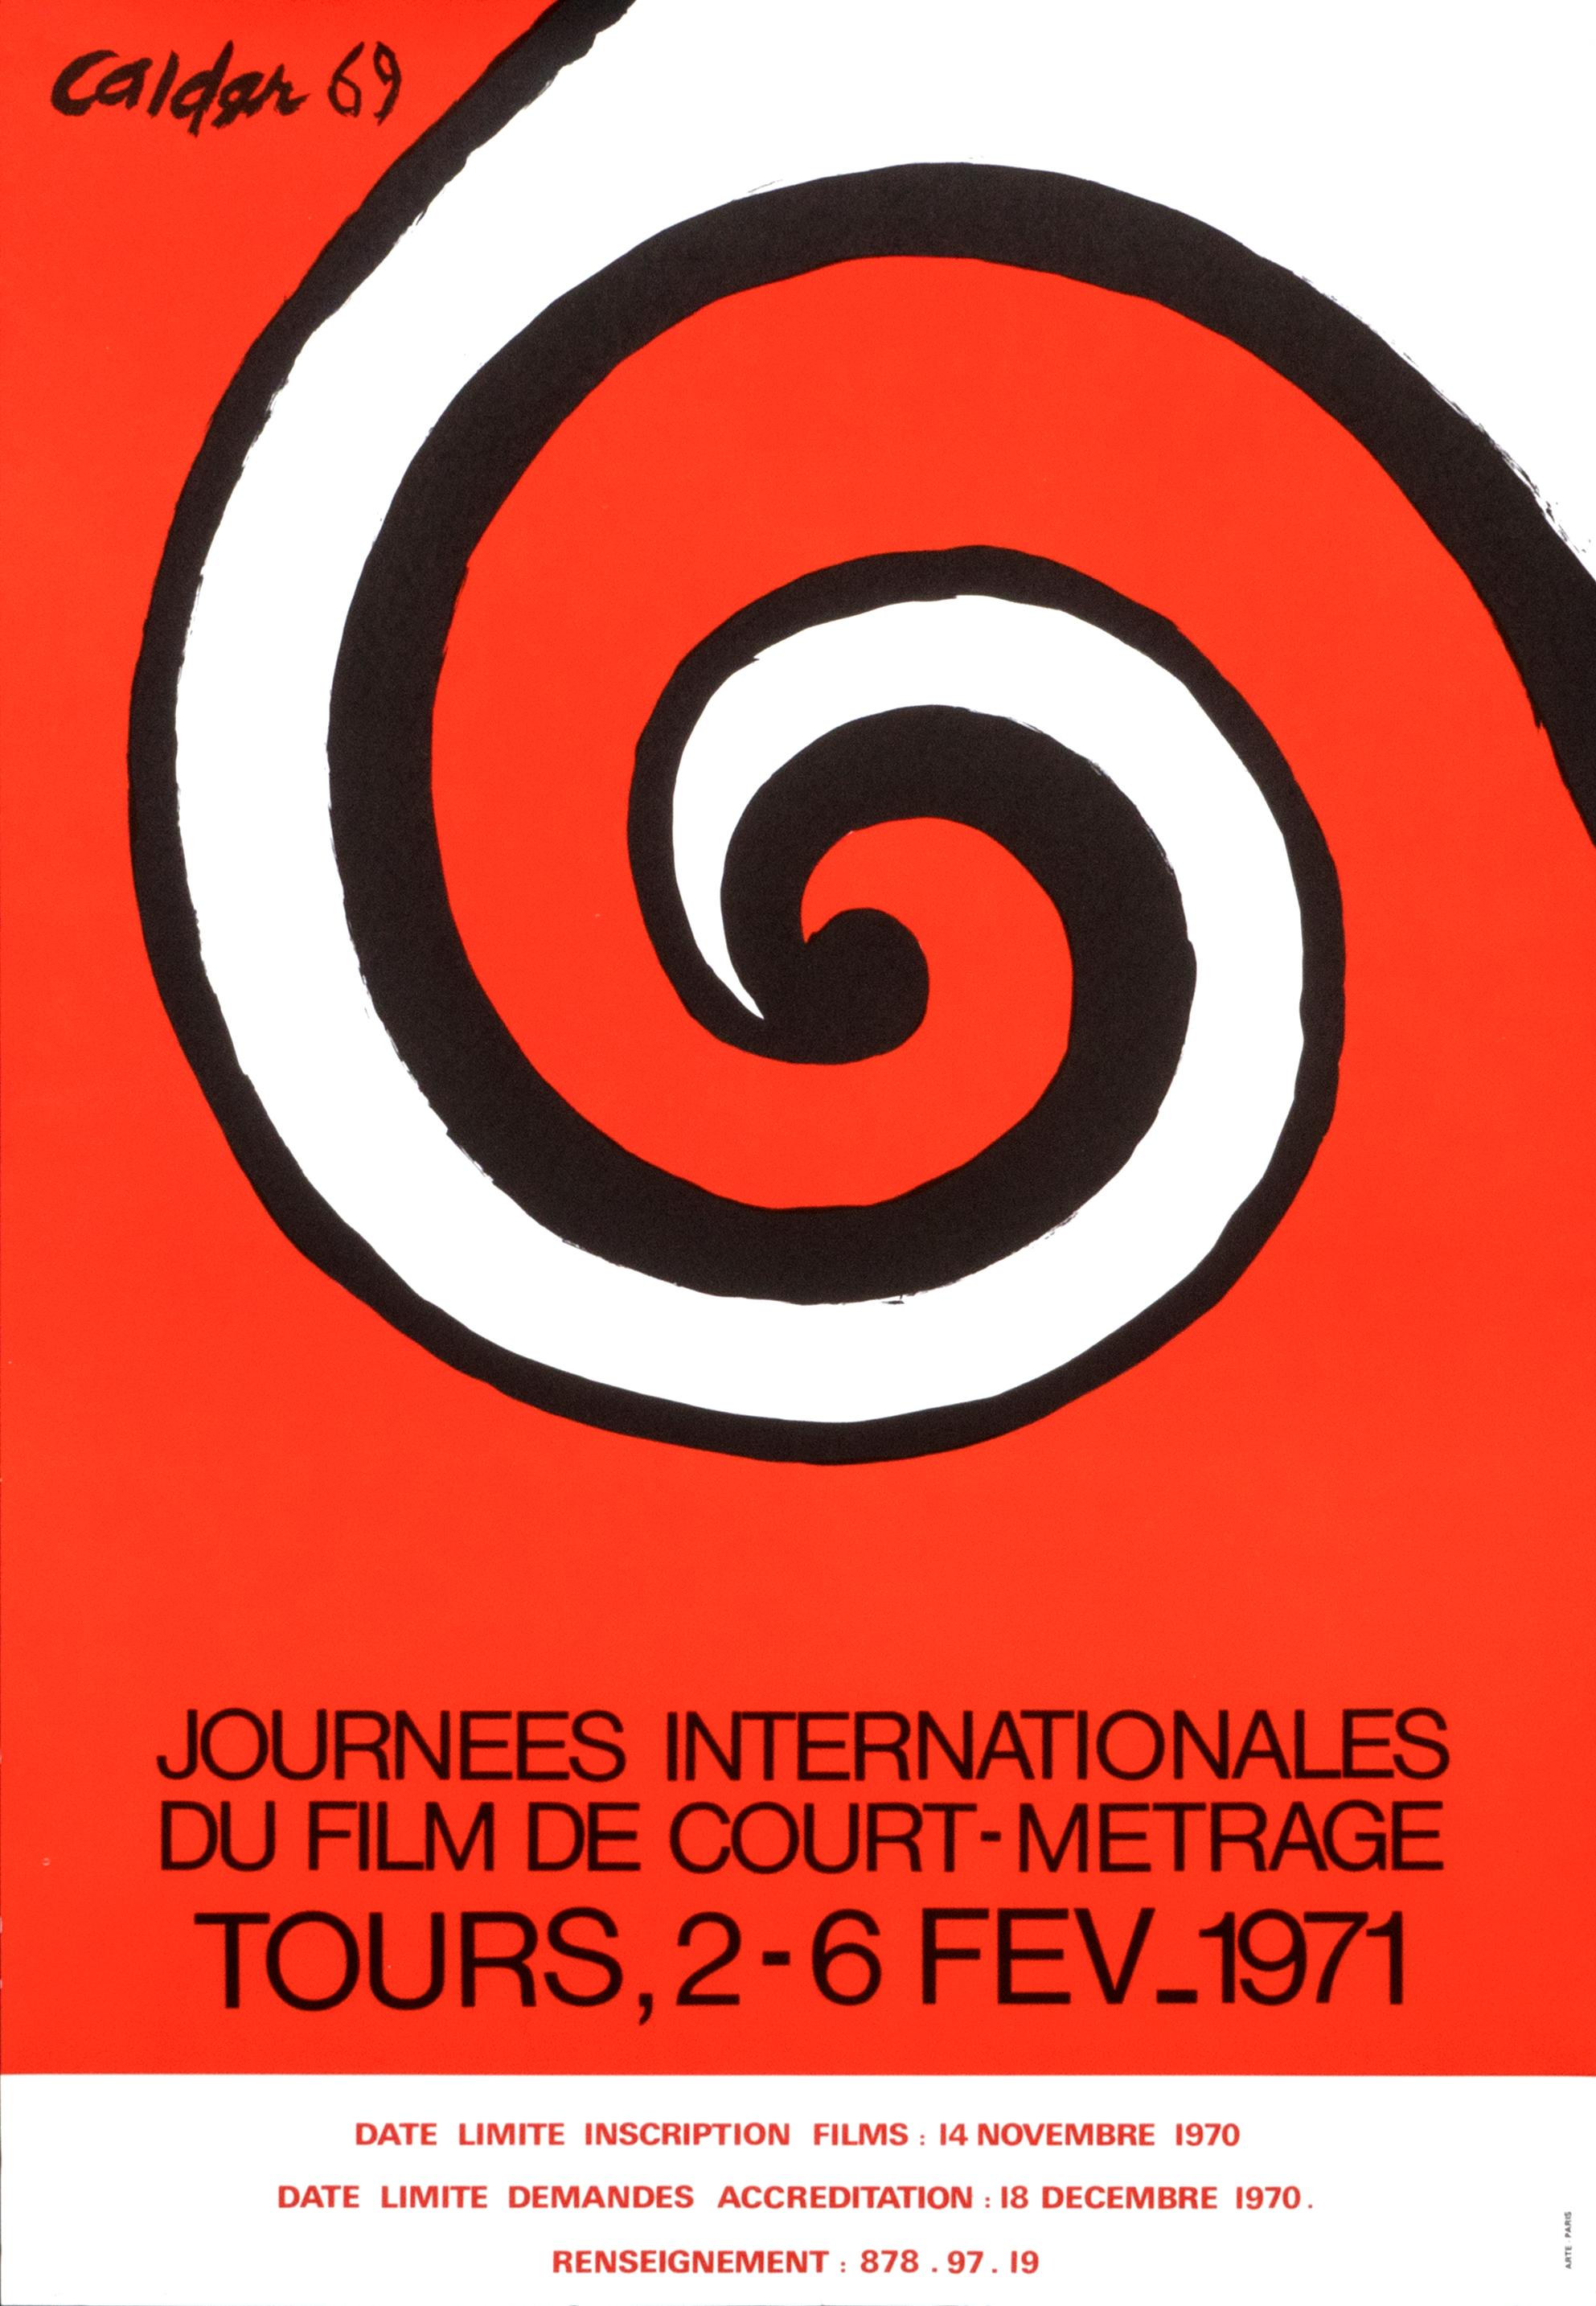 Alexander Calder Abstract Print - Original Calder Abstract Poster for 1971 French Short Film Festival (Tours)